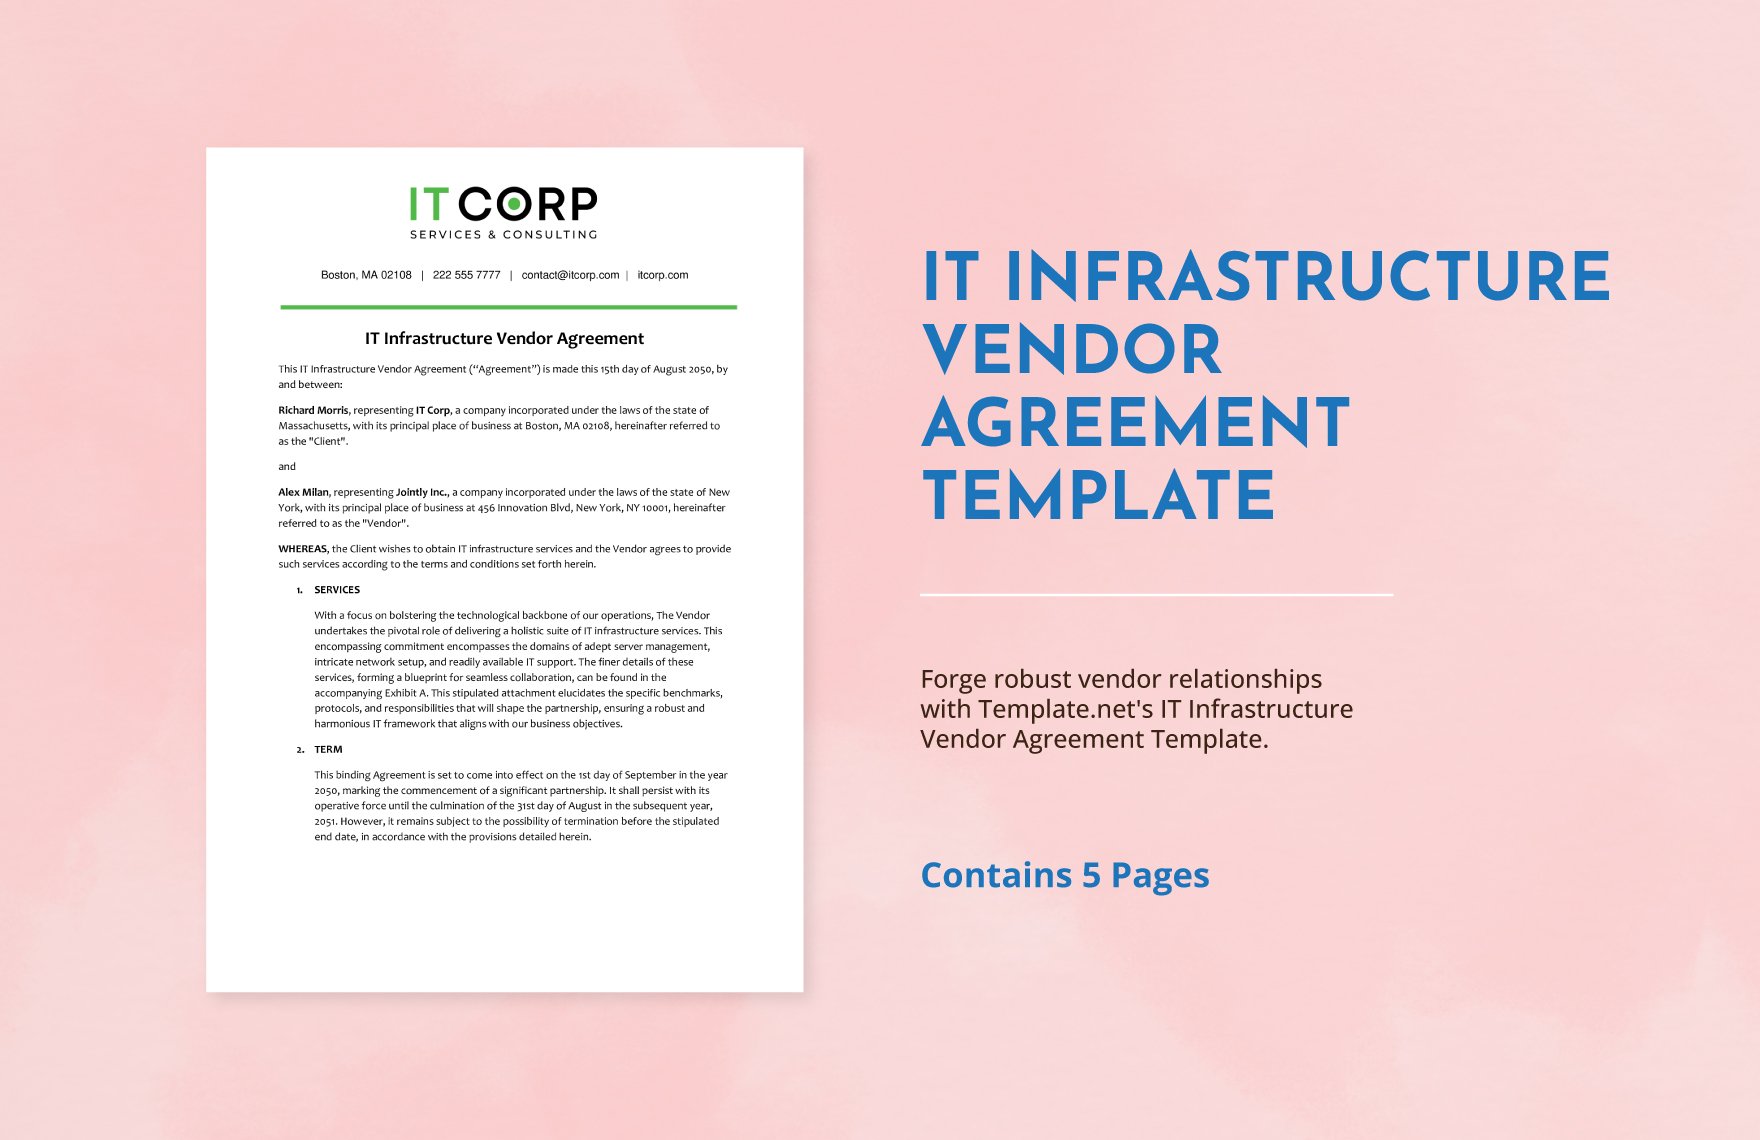 IT Infrastructure Vendor Agreement Template